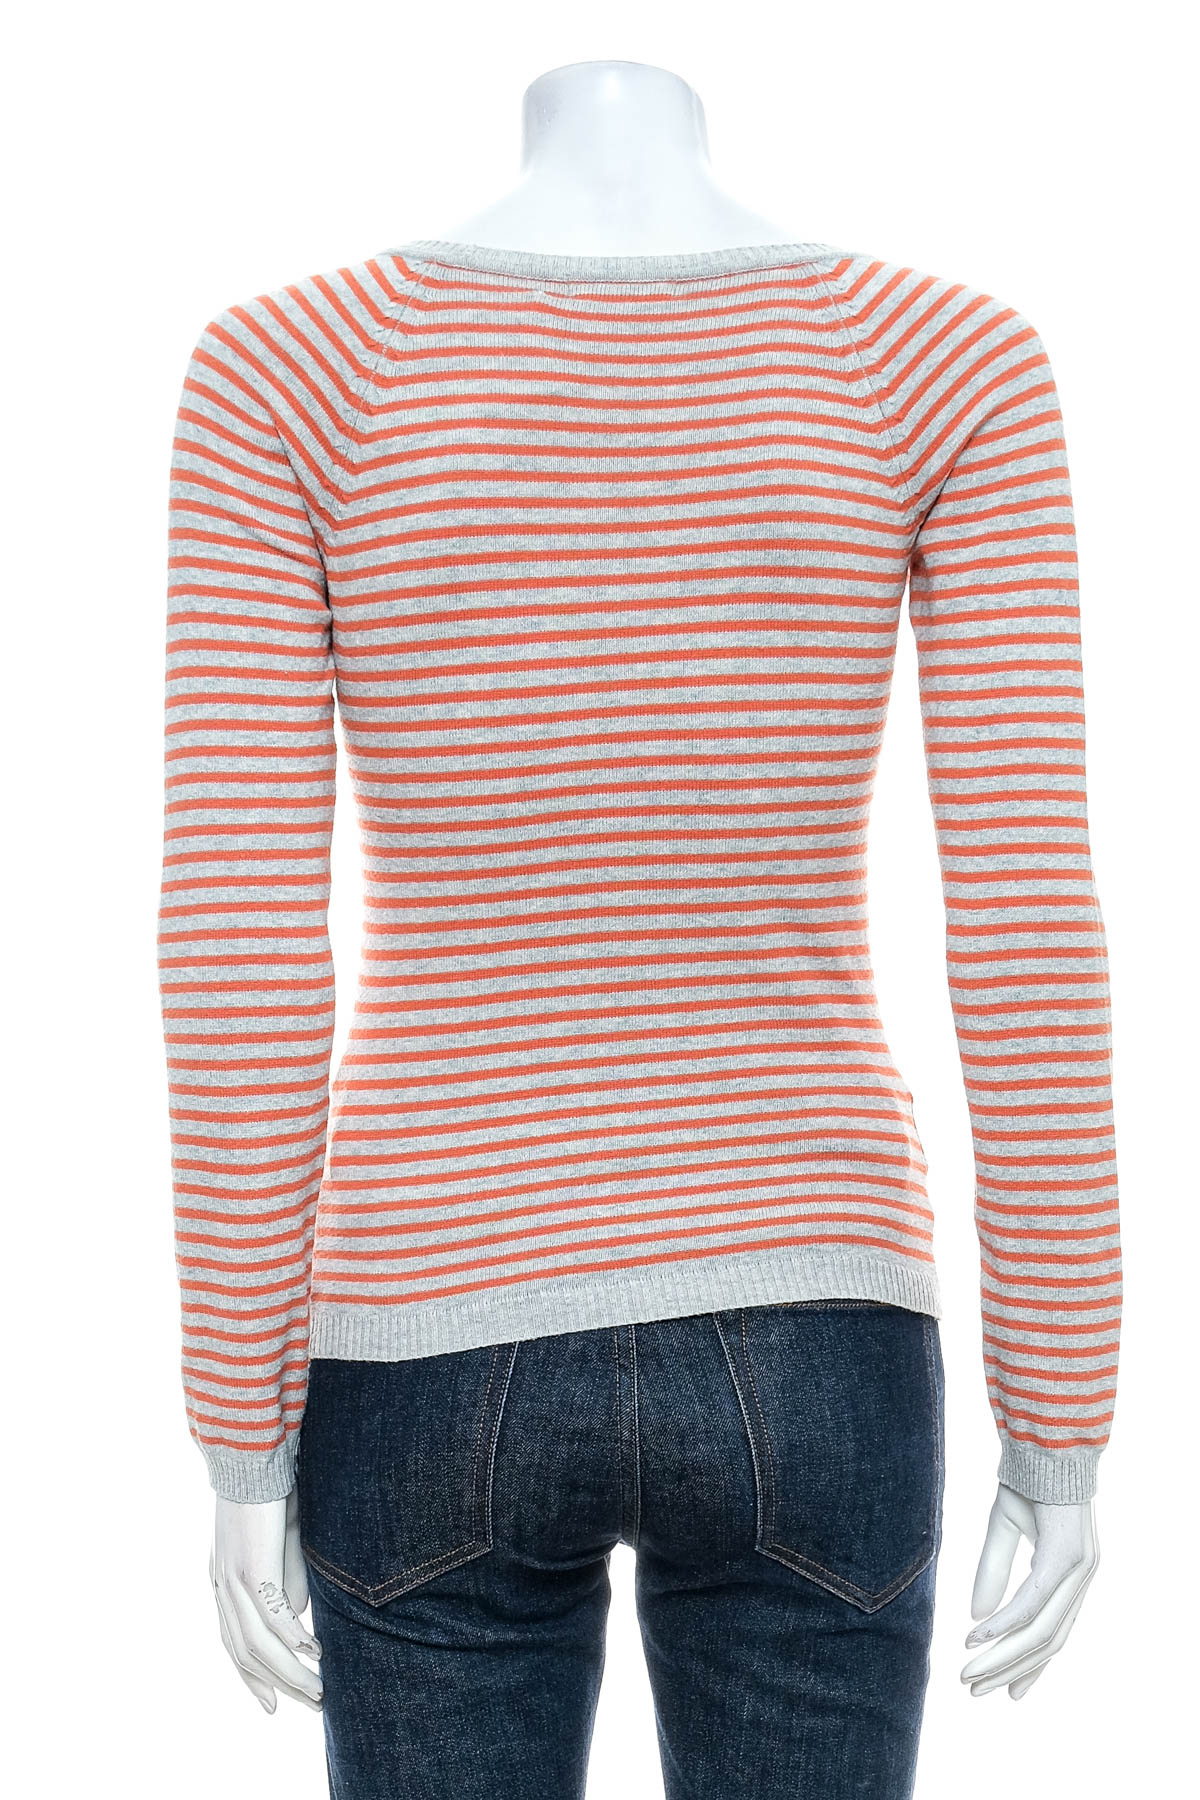 Women's sweater - Promod - 1